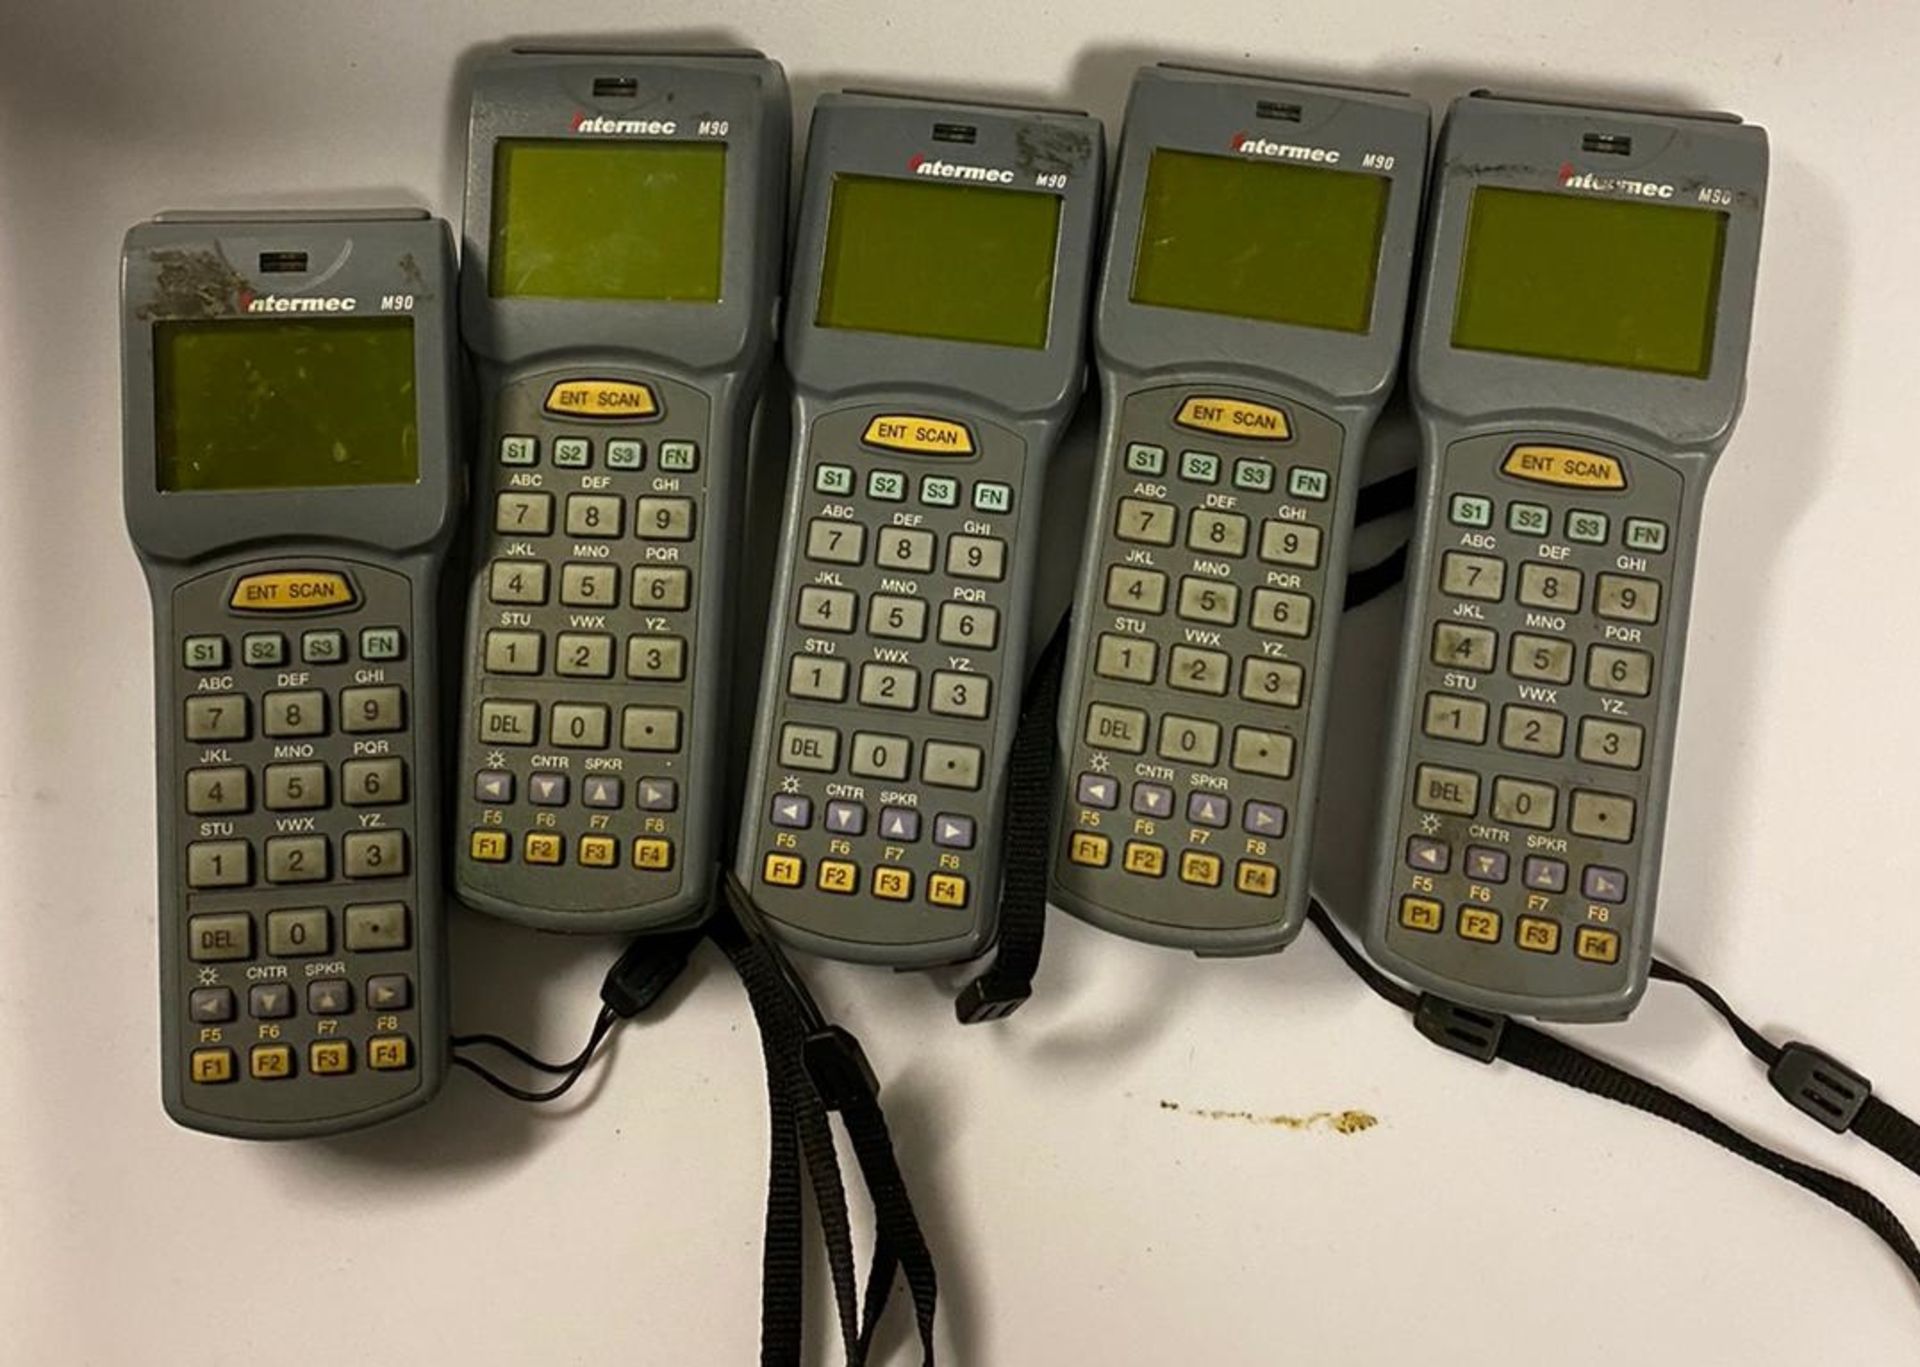 2 x Intermec M90 Portable Barcode Scanner - Used Condition - Location: Altrincham WA14 - - Image 7 of 8